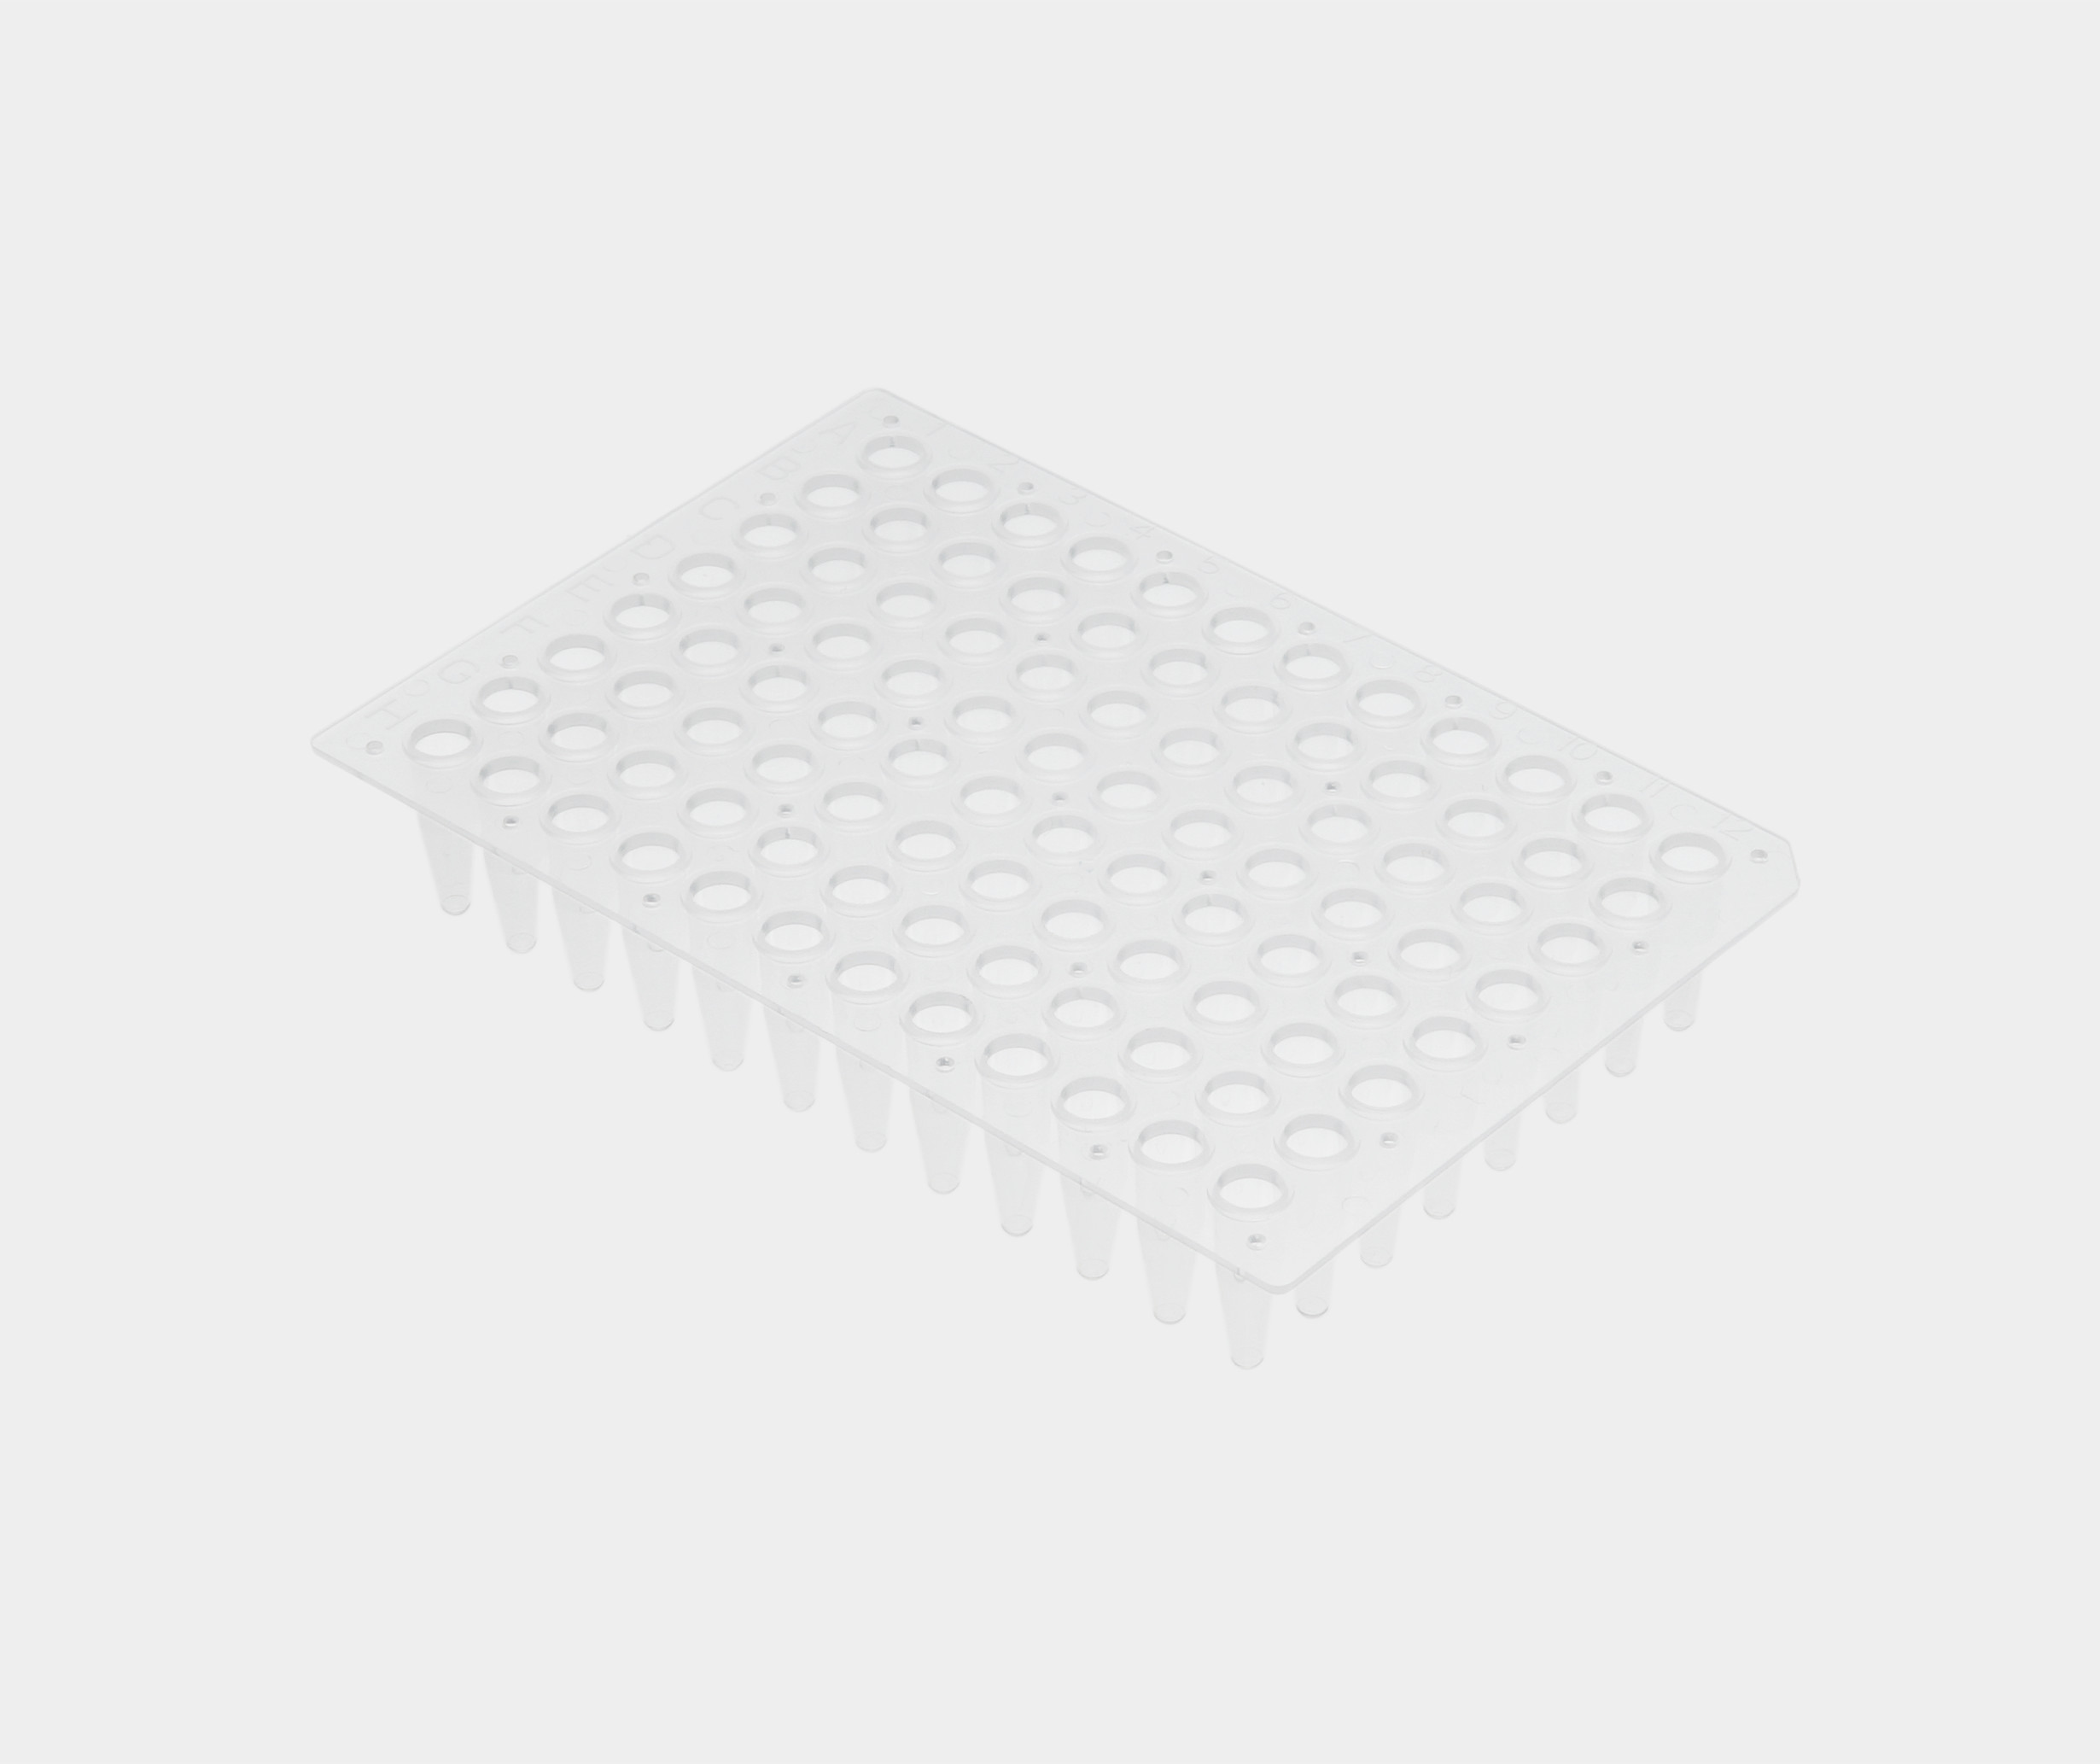 96Well 0.2ml Transparent No Skirt PCR Plate